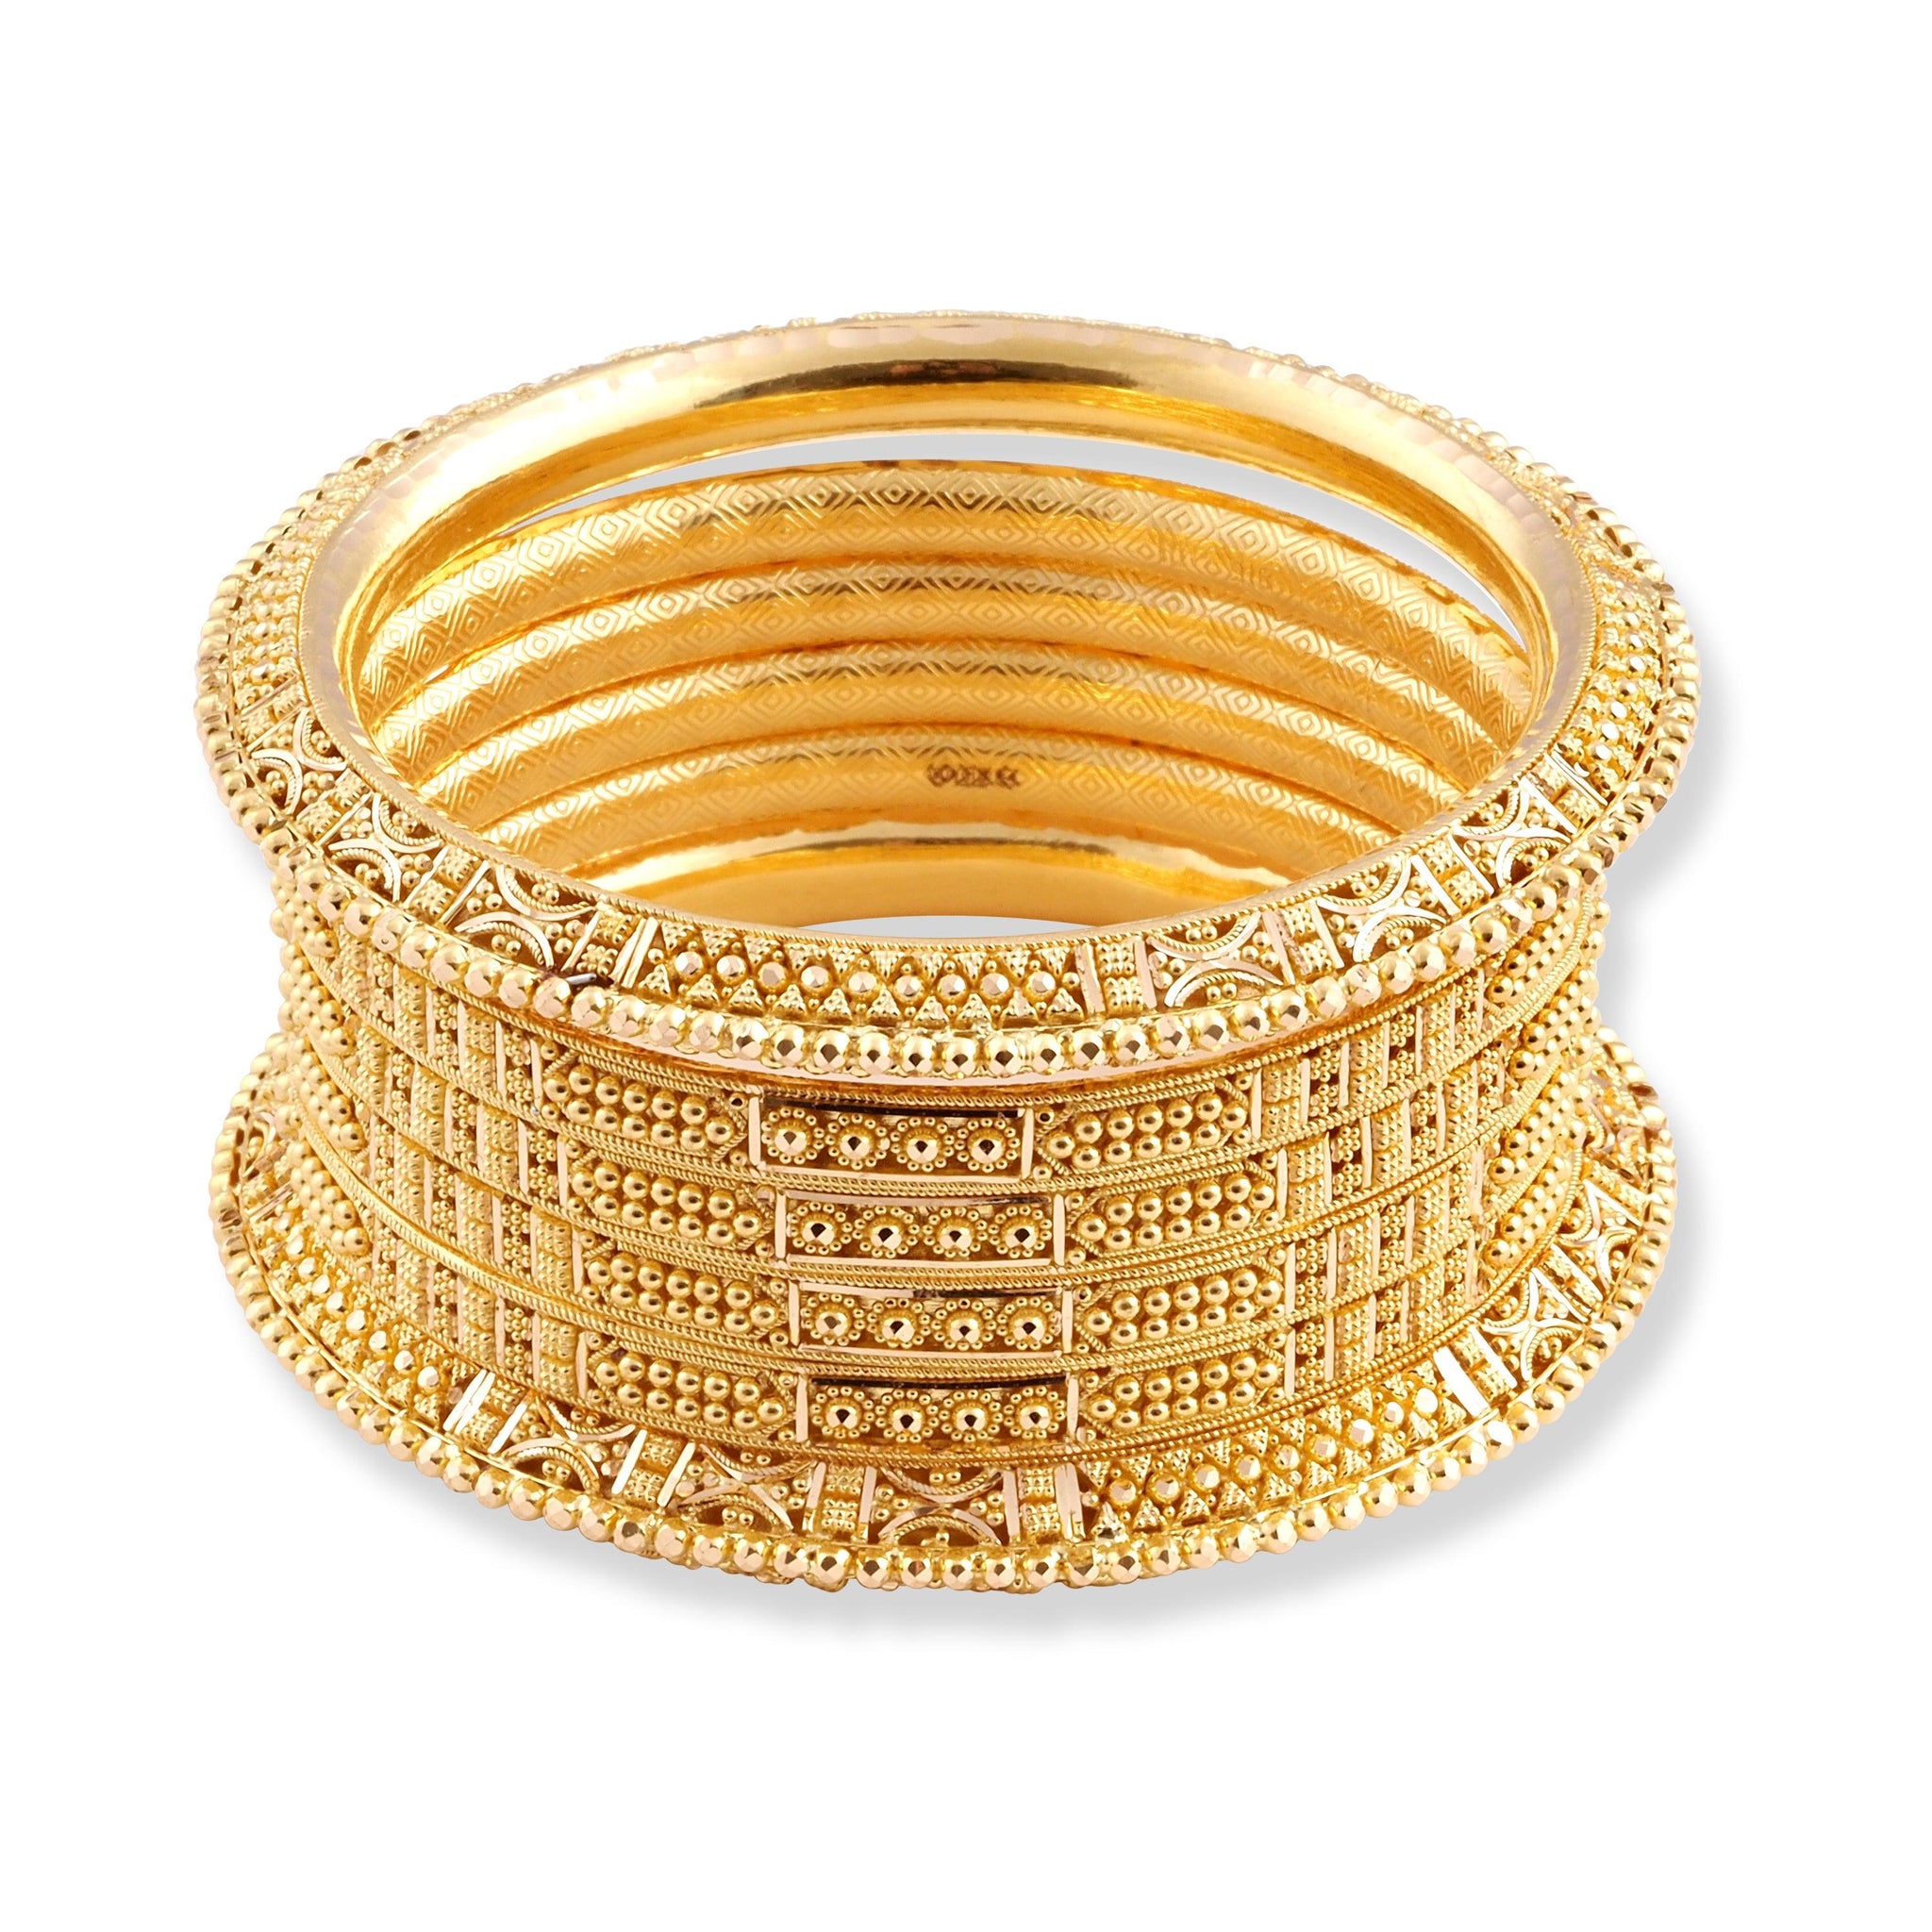 Set of Six 22ct Gold Bangles with Diamond Cut Bead Design and Filigree Work B-8570